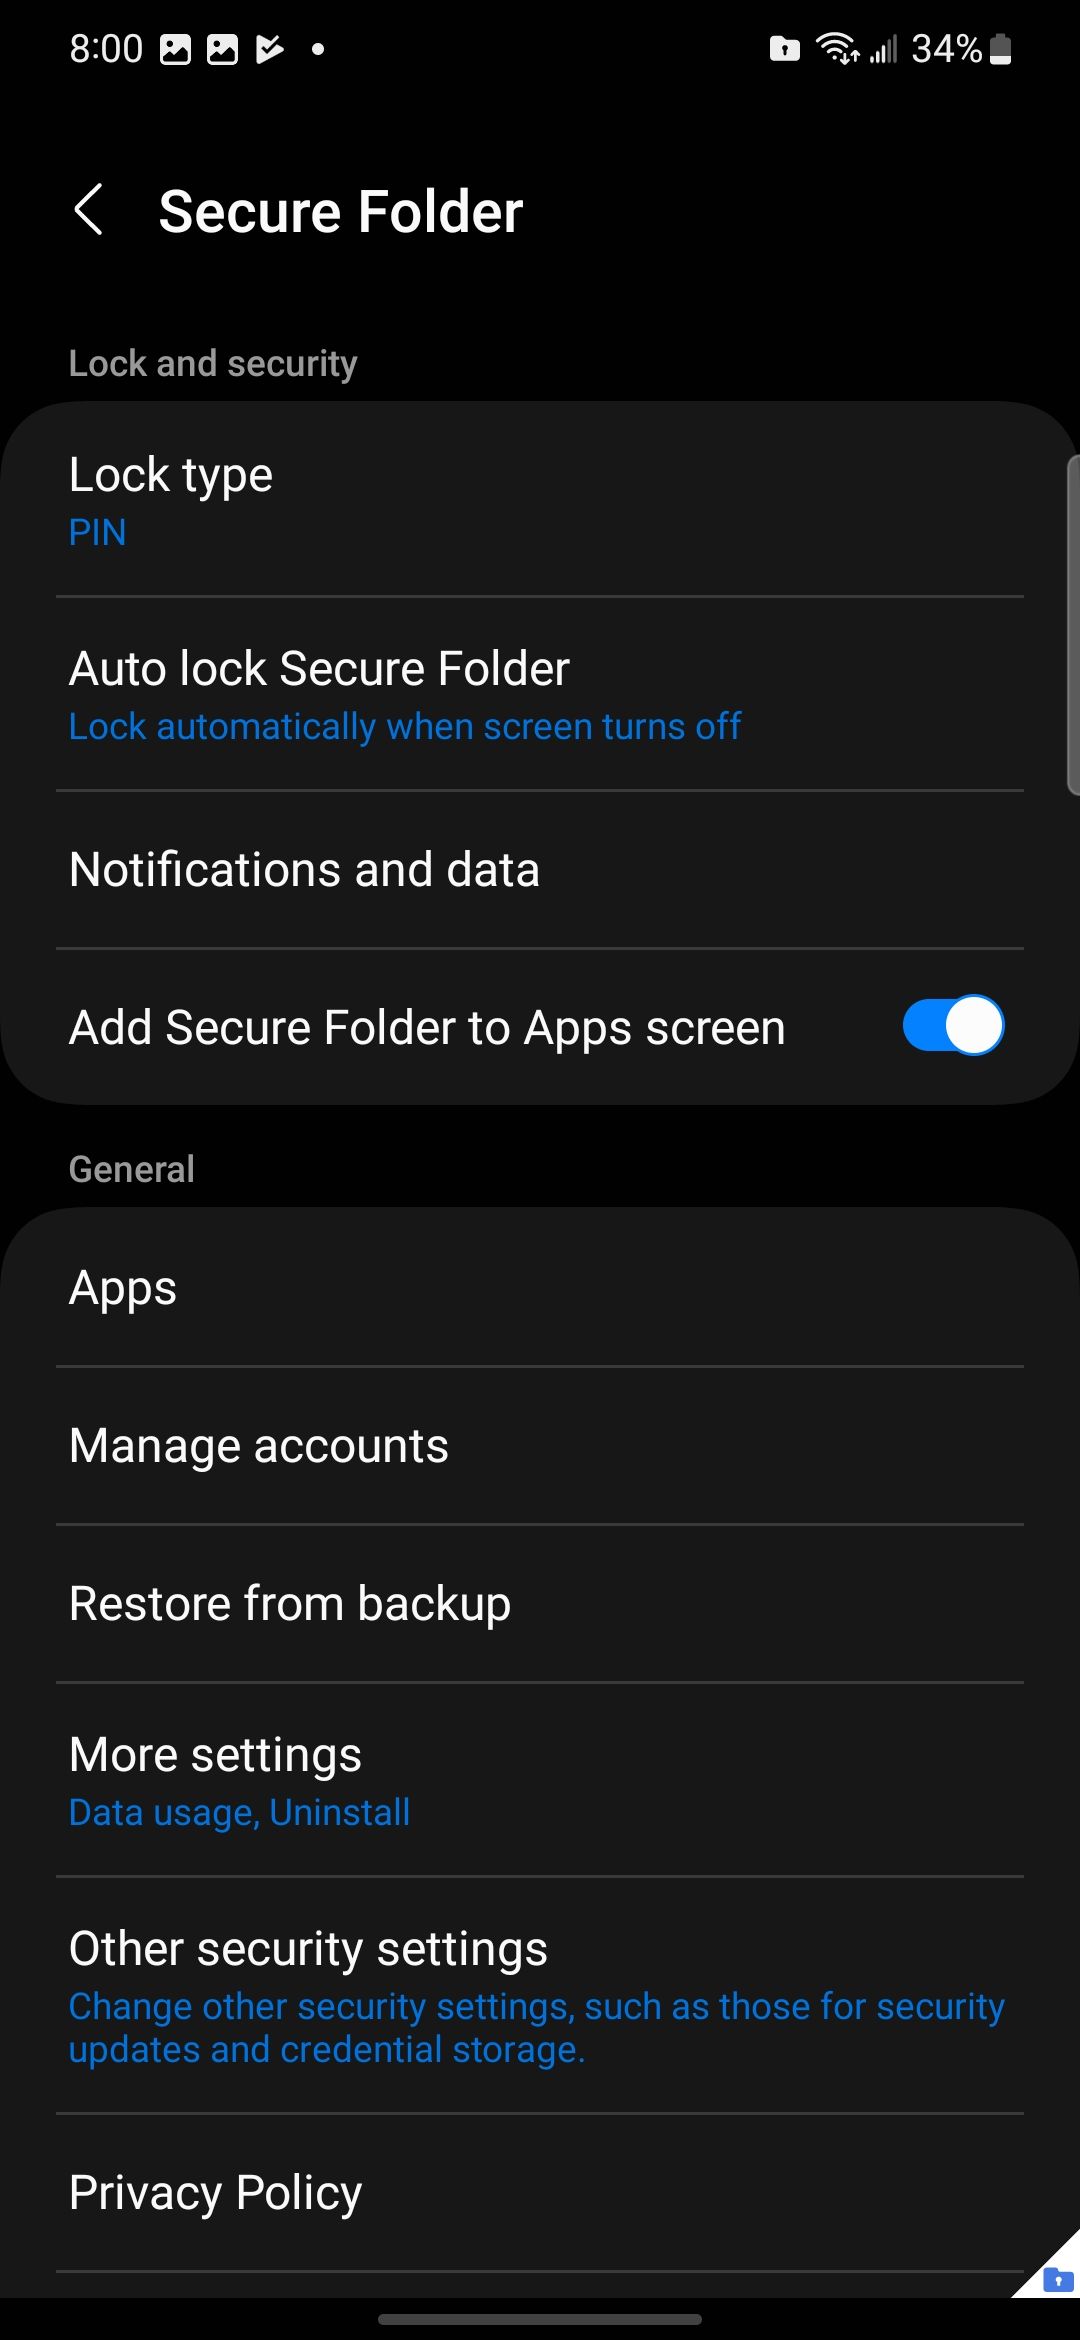 Secure Folder settings in the Samsung Settings app